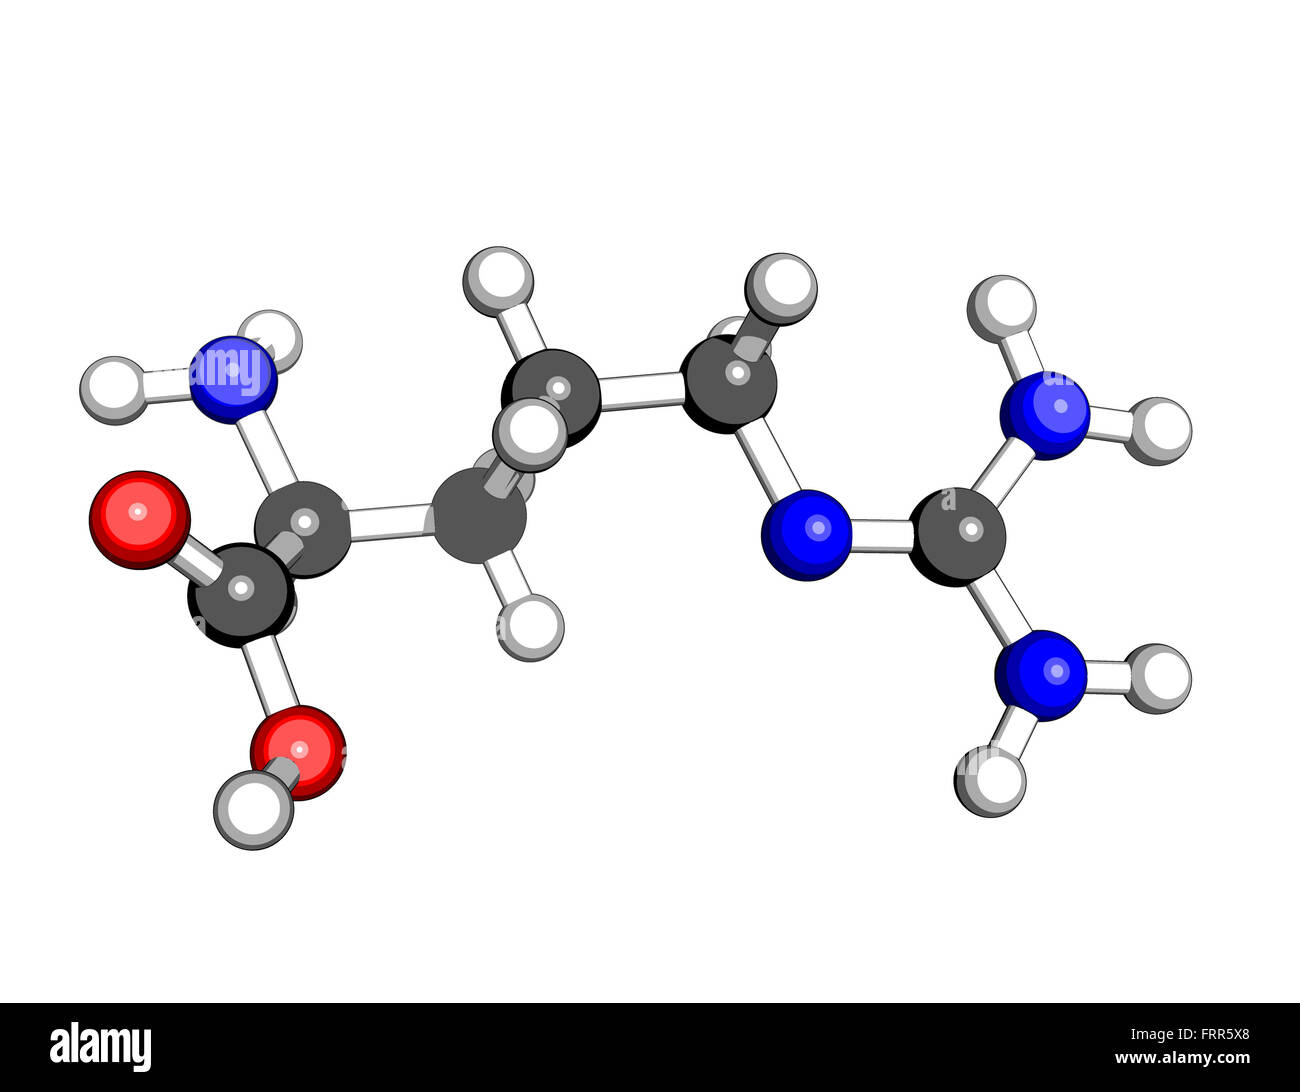 Amino acid arginine molecular structure on a white background Stock Photo